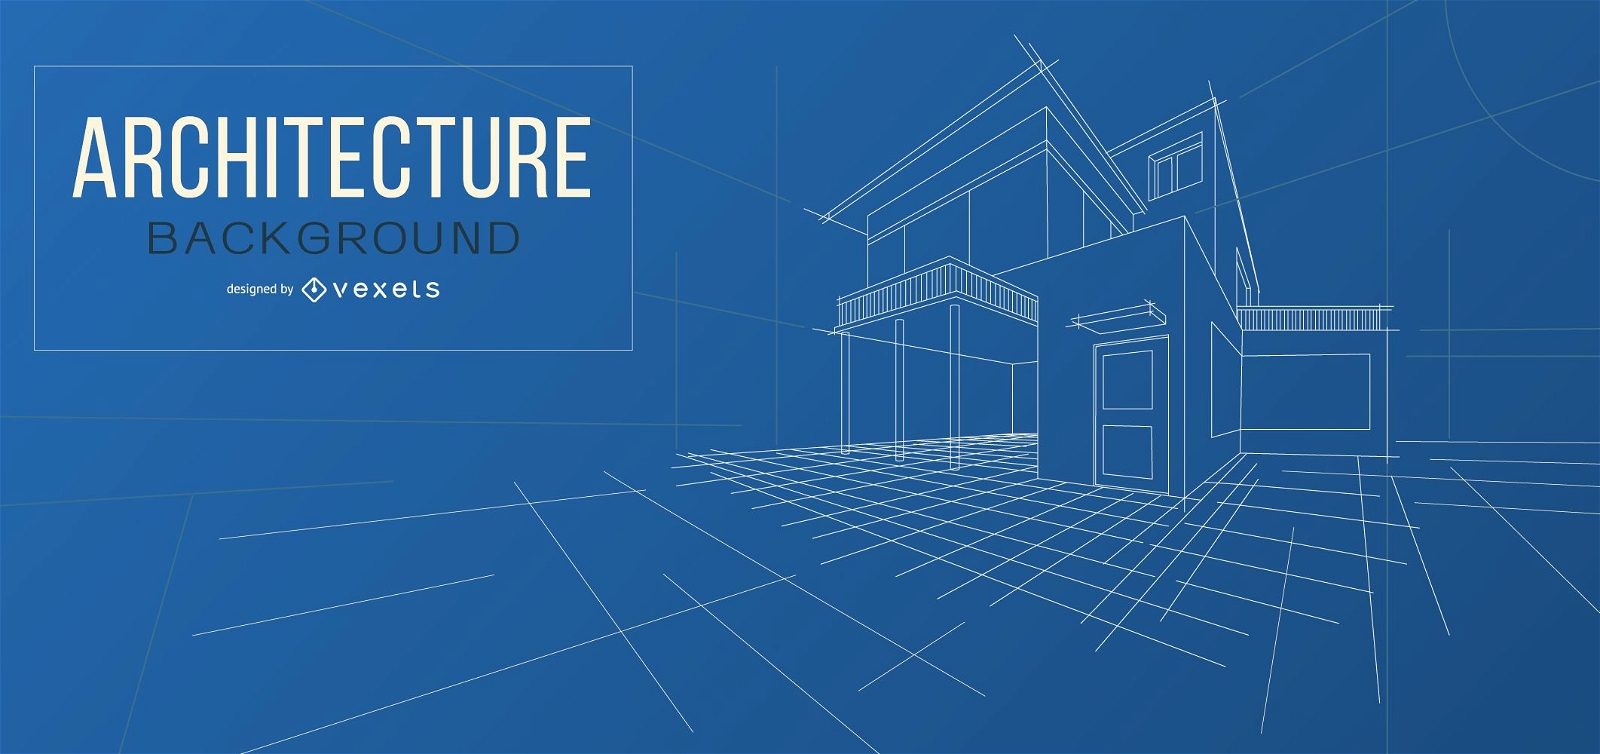 Architecture Blueprint Background Design Vector Download